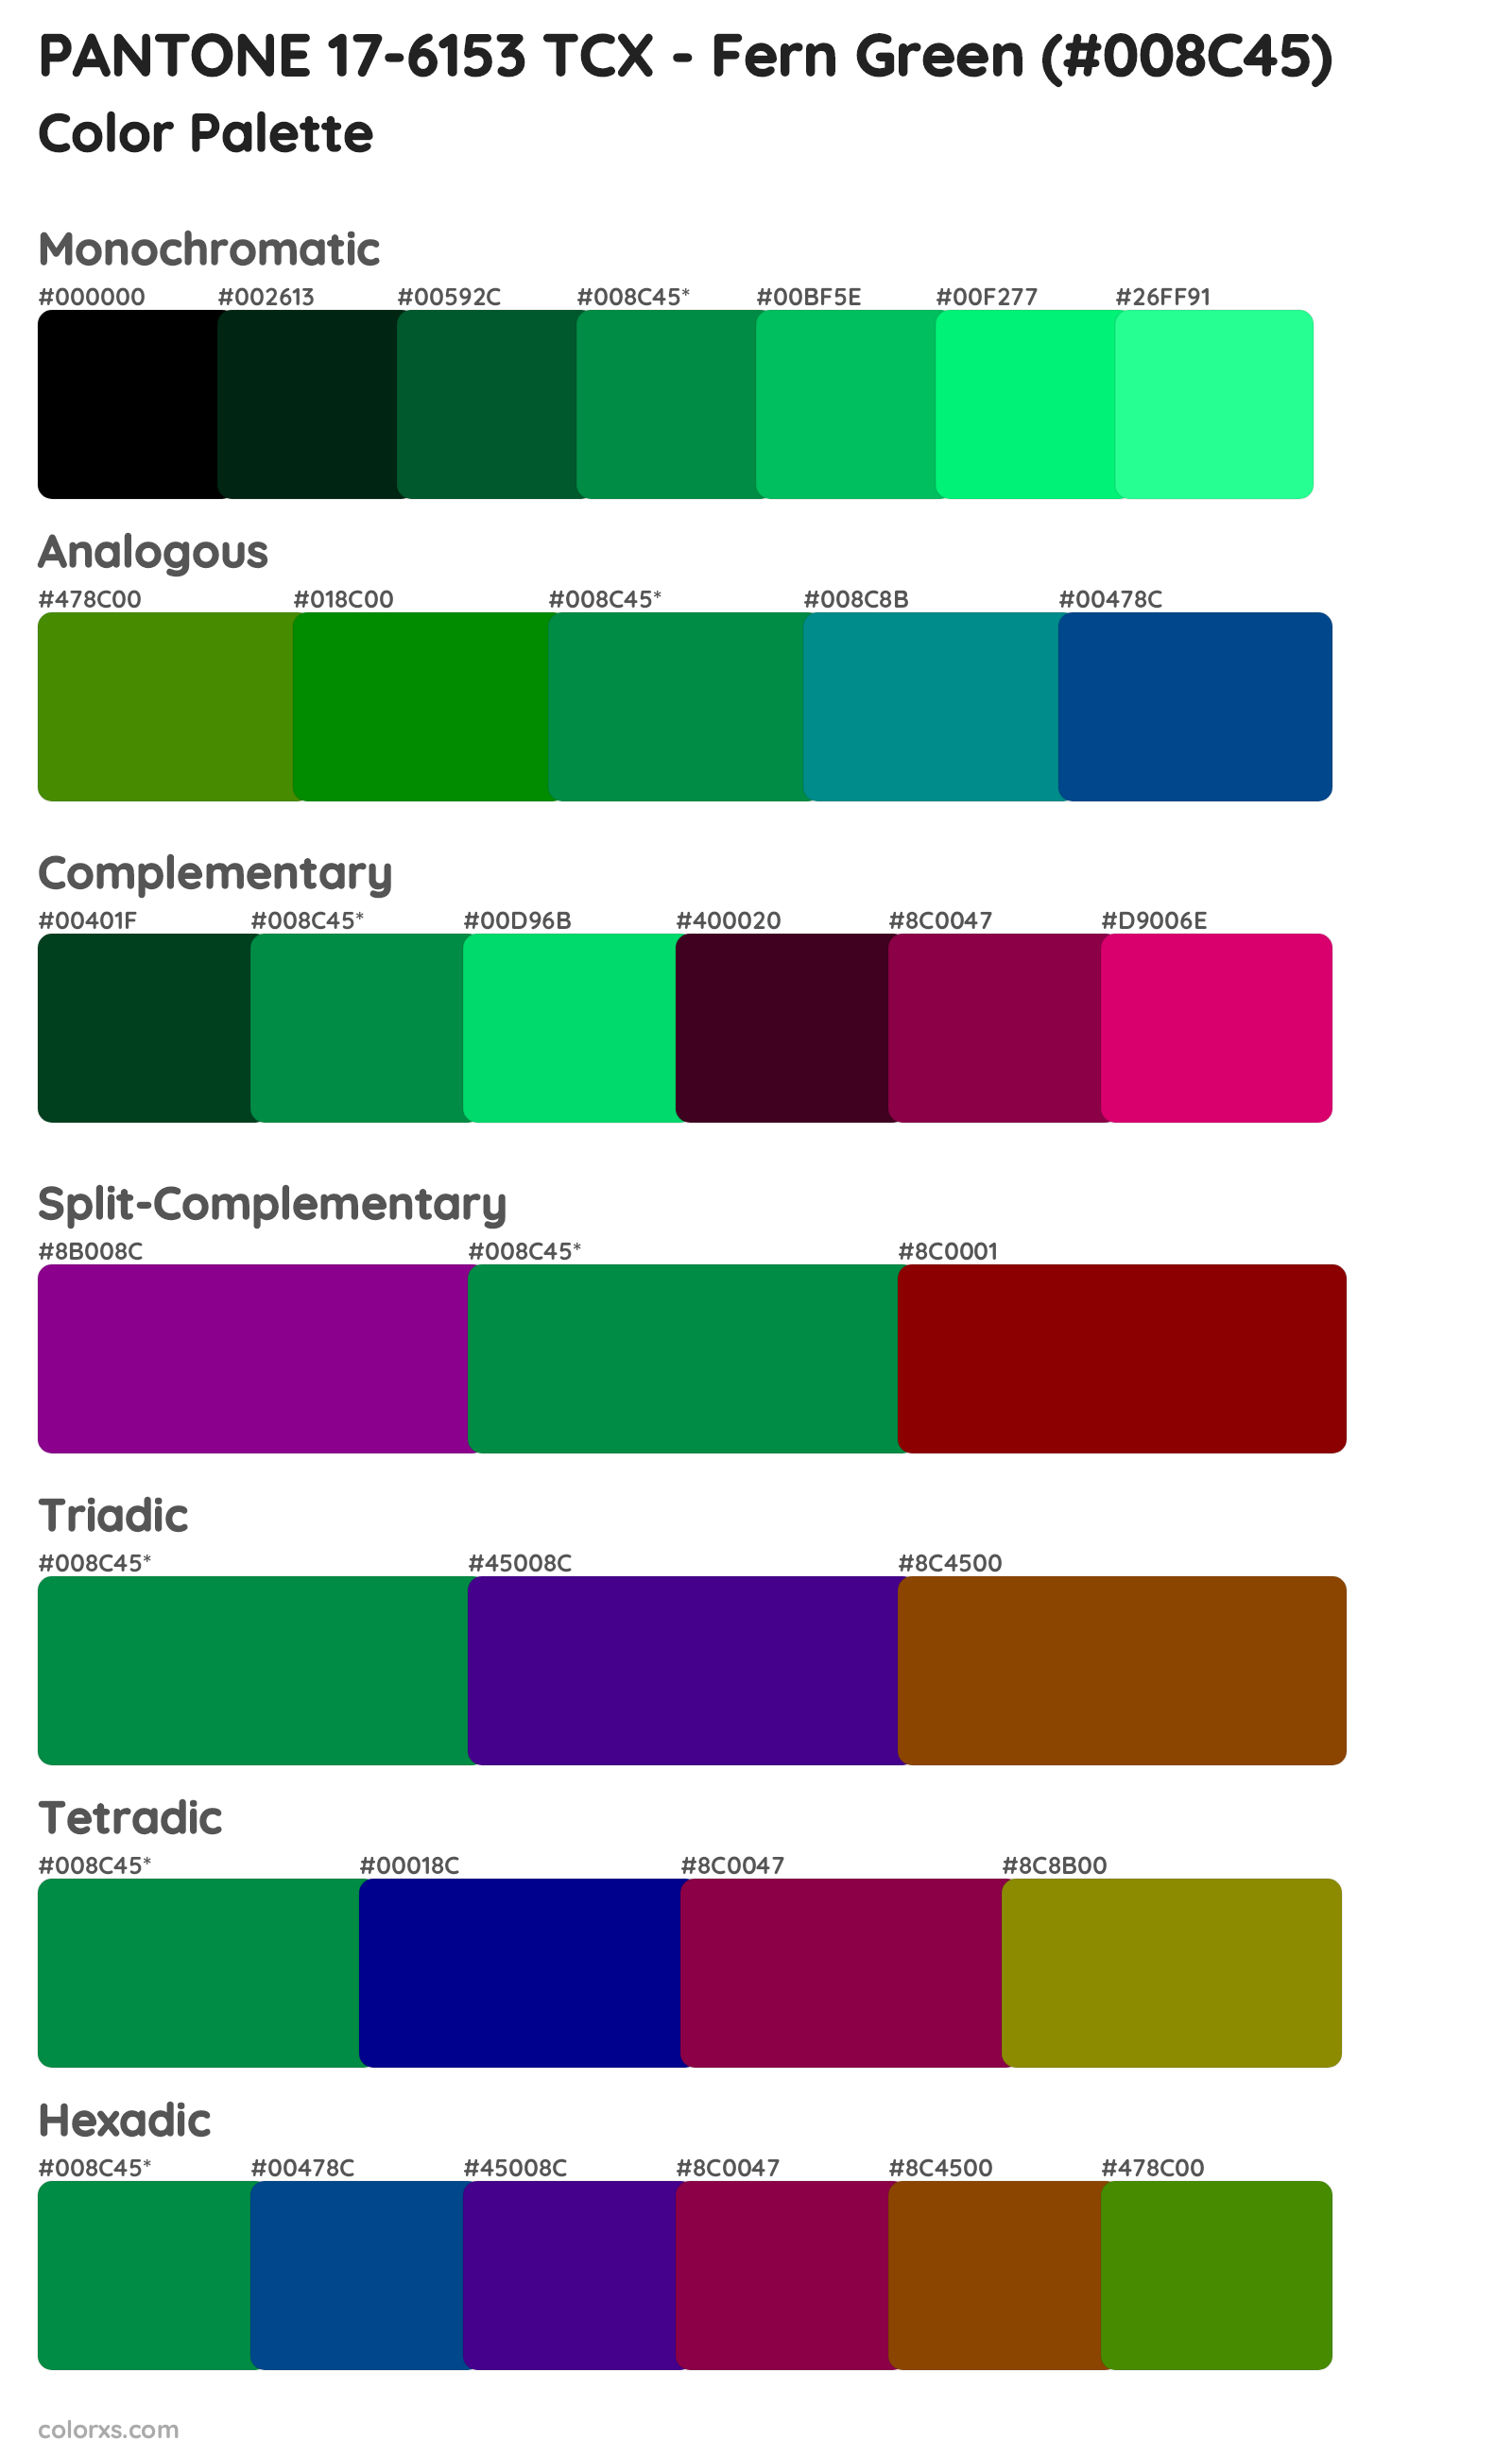 PANTONE 17-6153 TCX - Fern Green Color Scheme Palettes